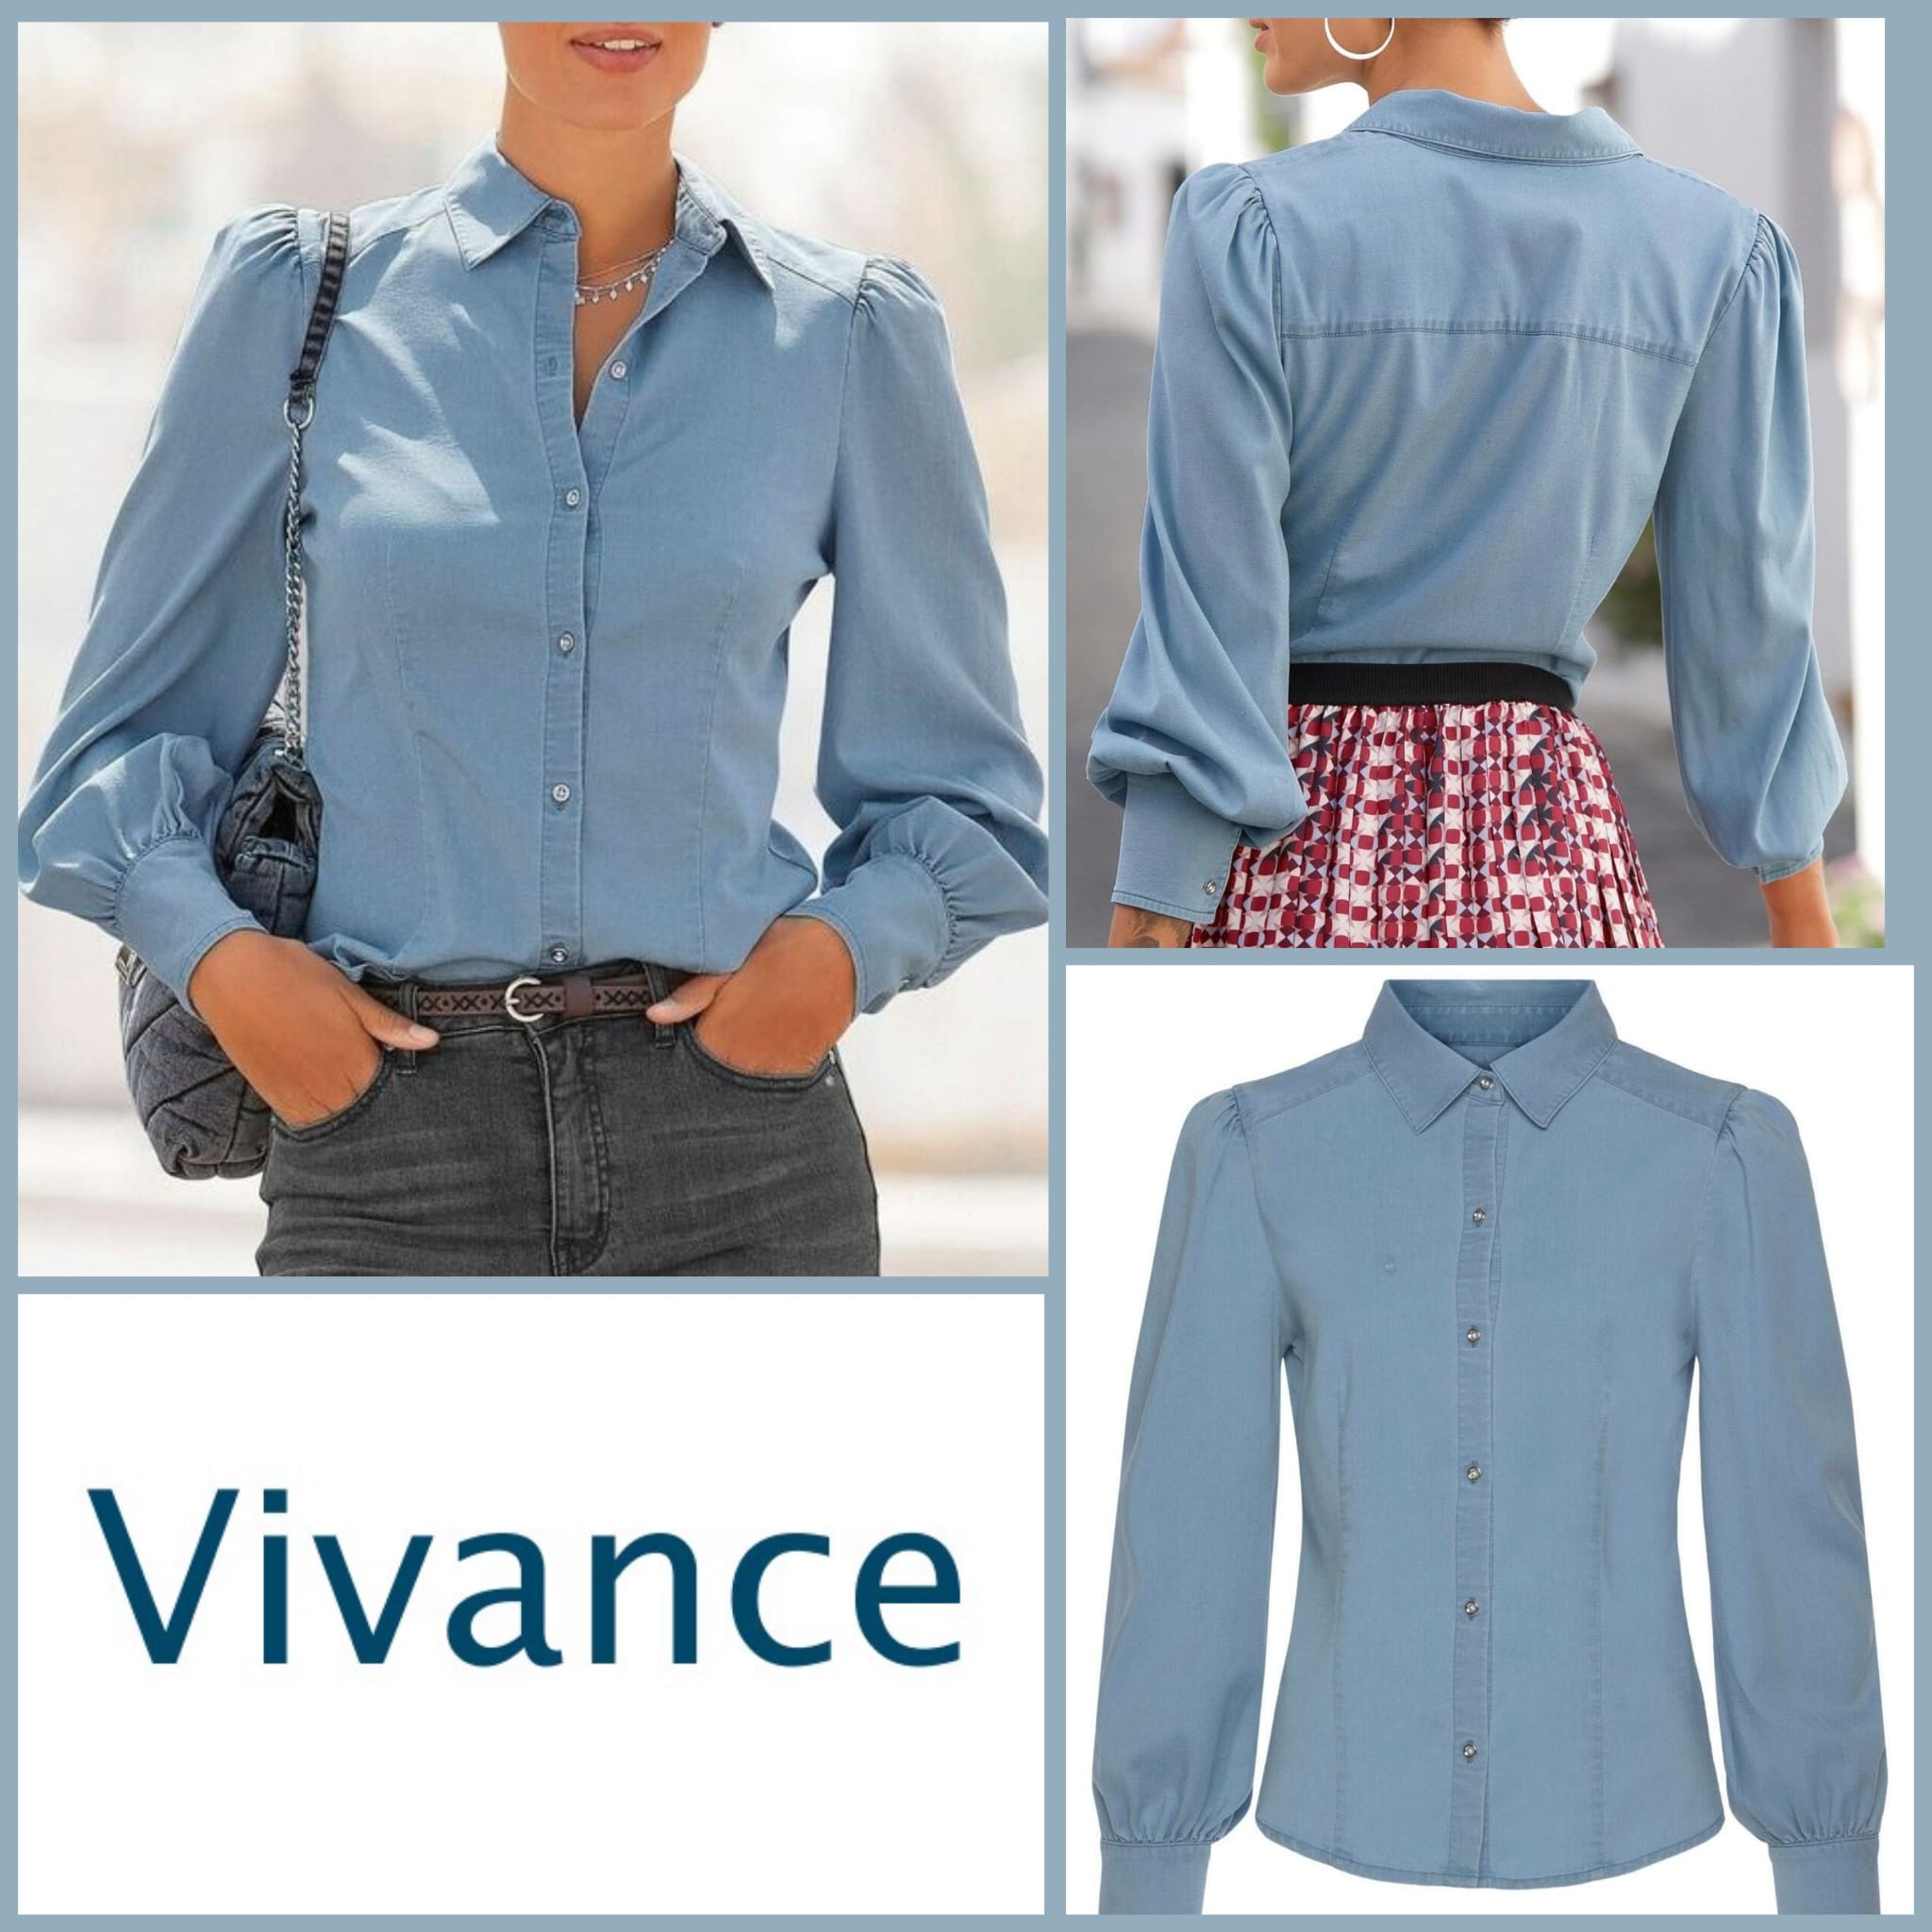 Women's shirt from Vivance